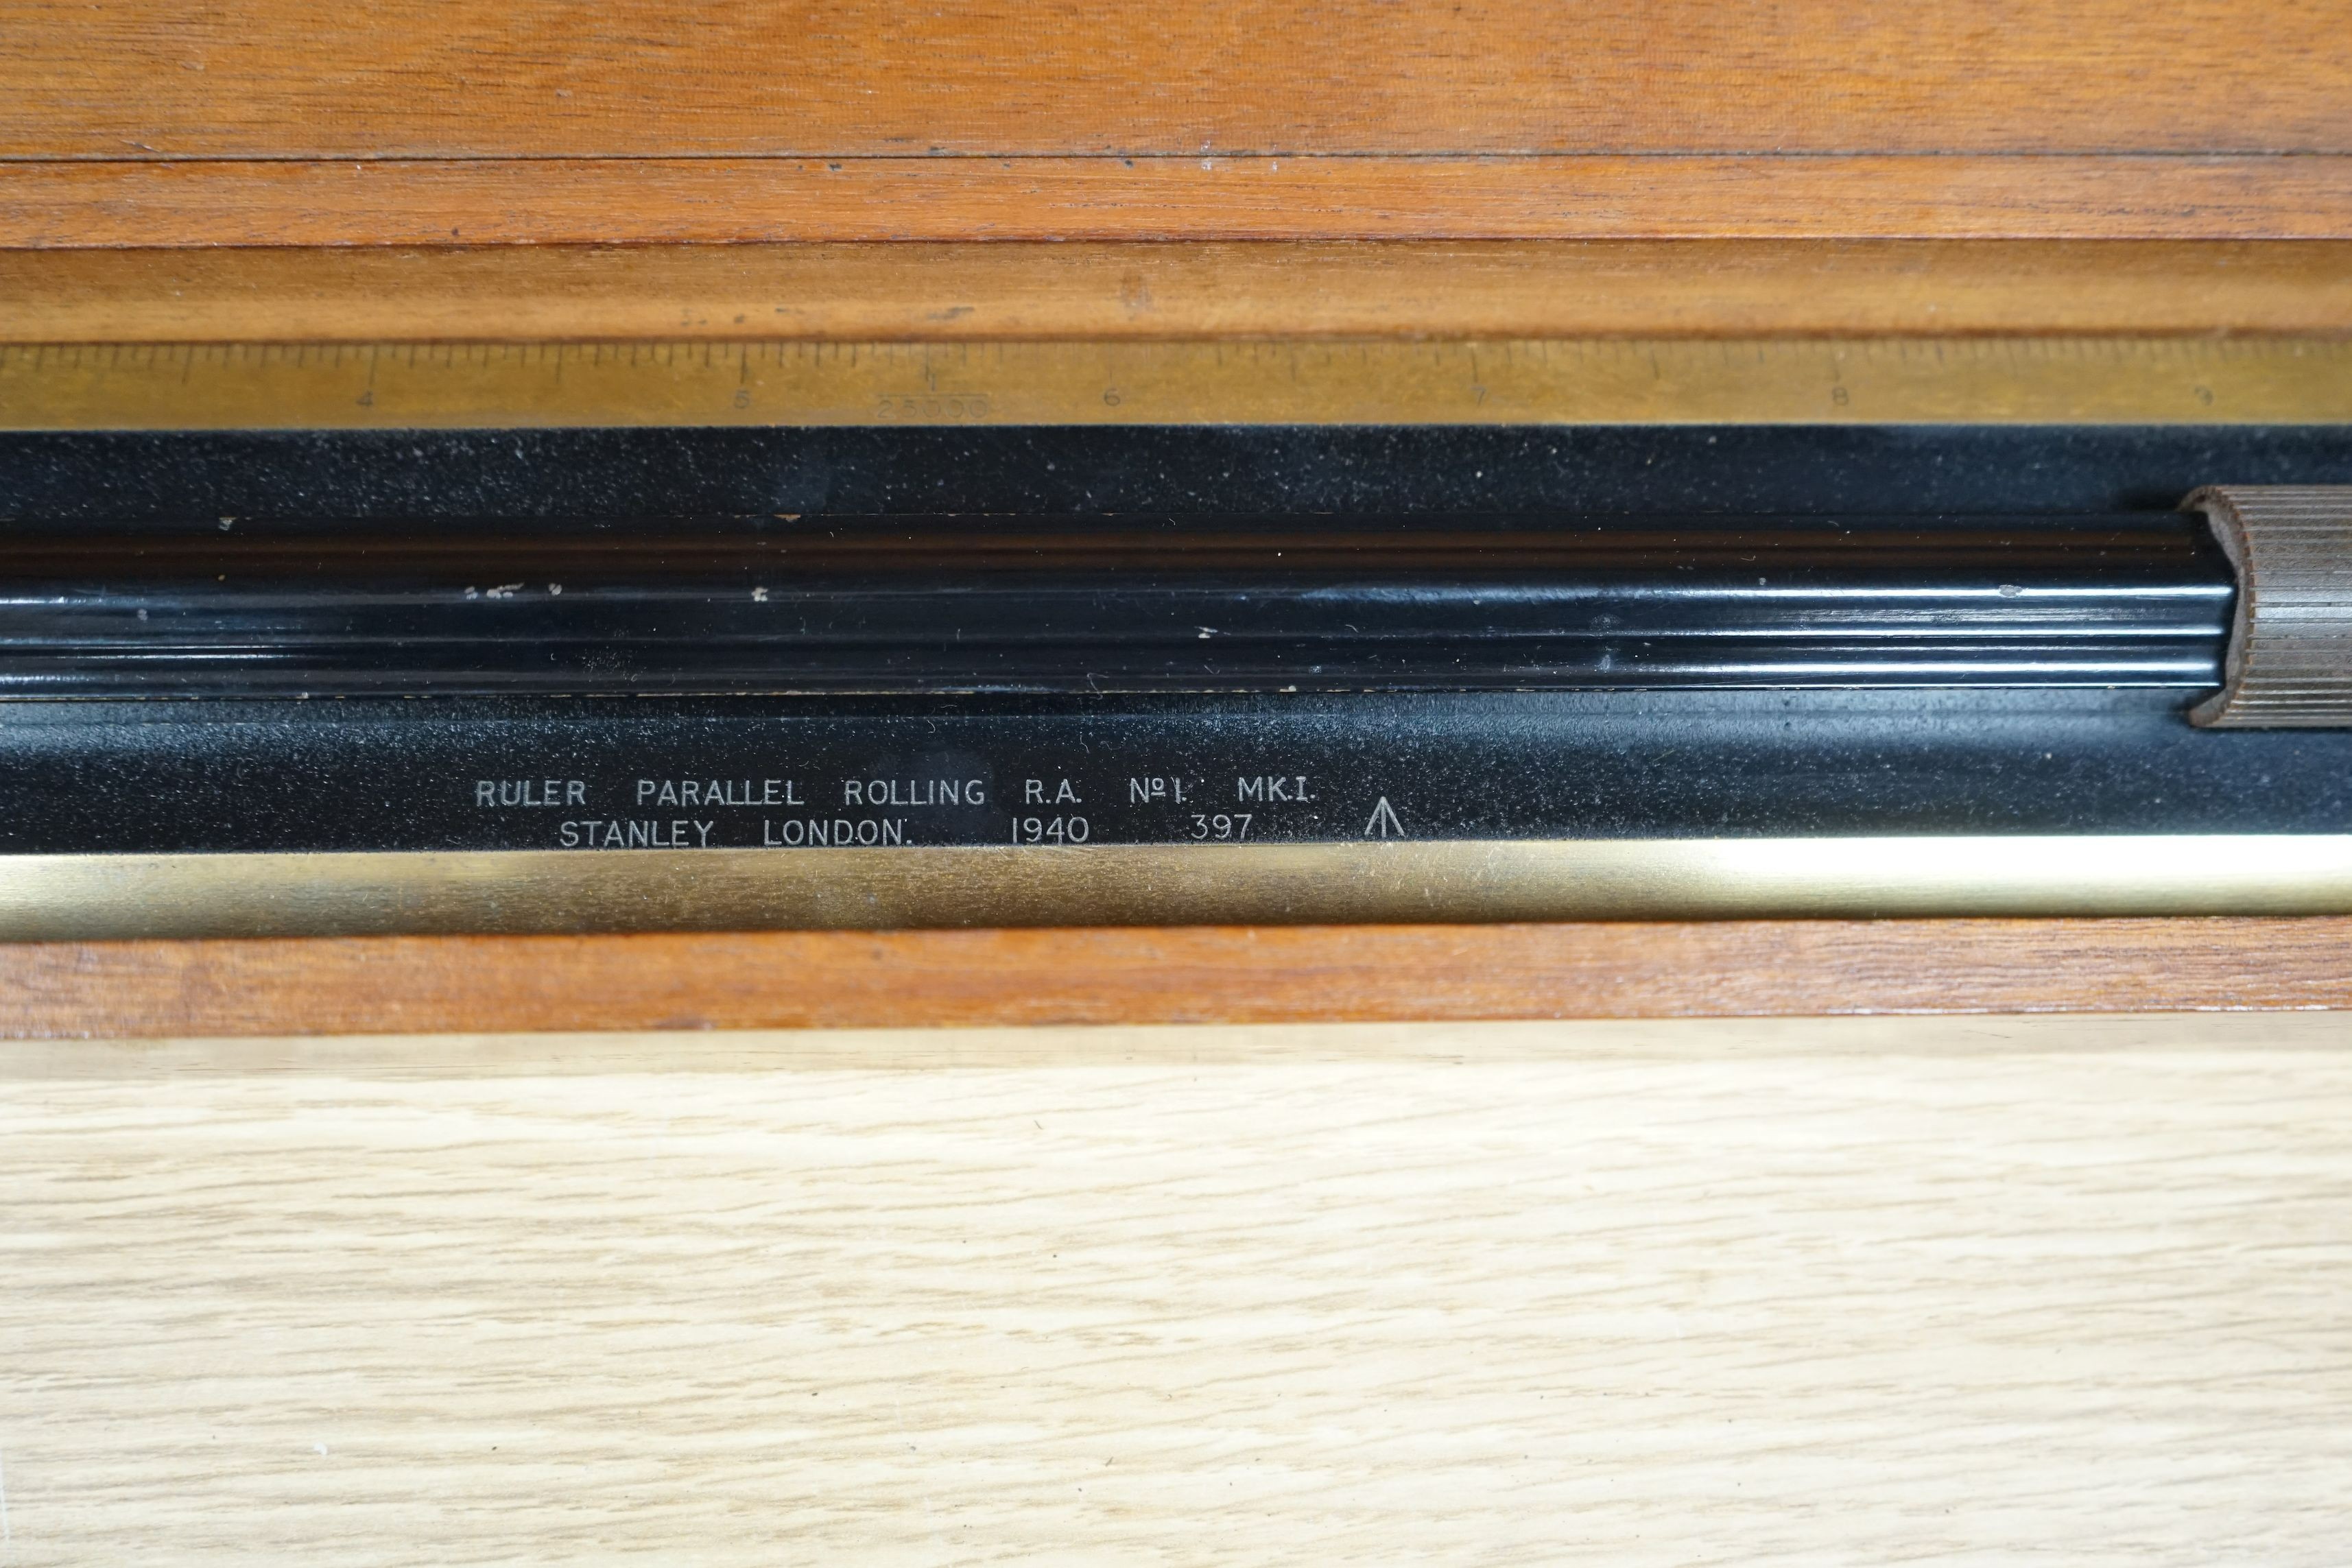 A cased Stanley Parallel Ruler, No:1 MK1 1940, Ruler 46cms long